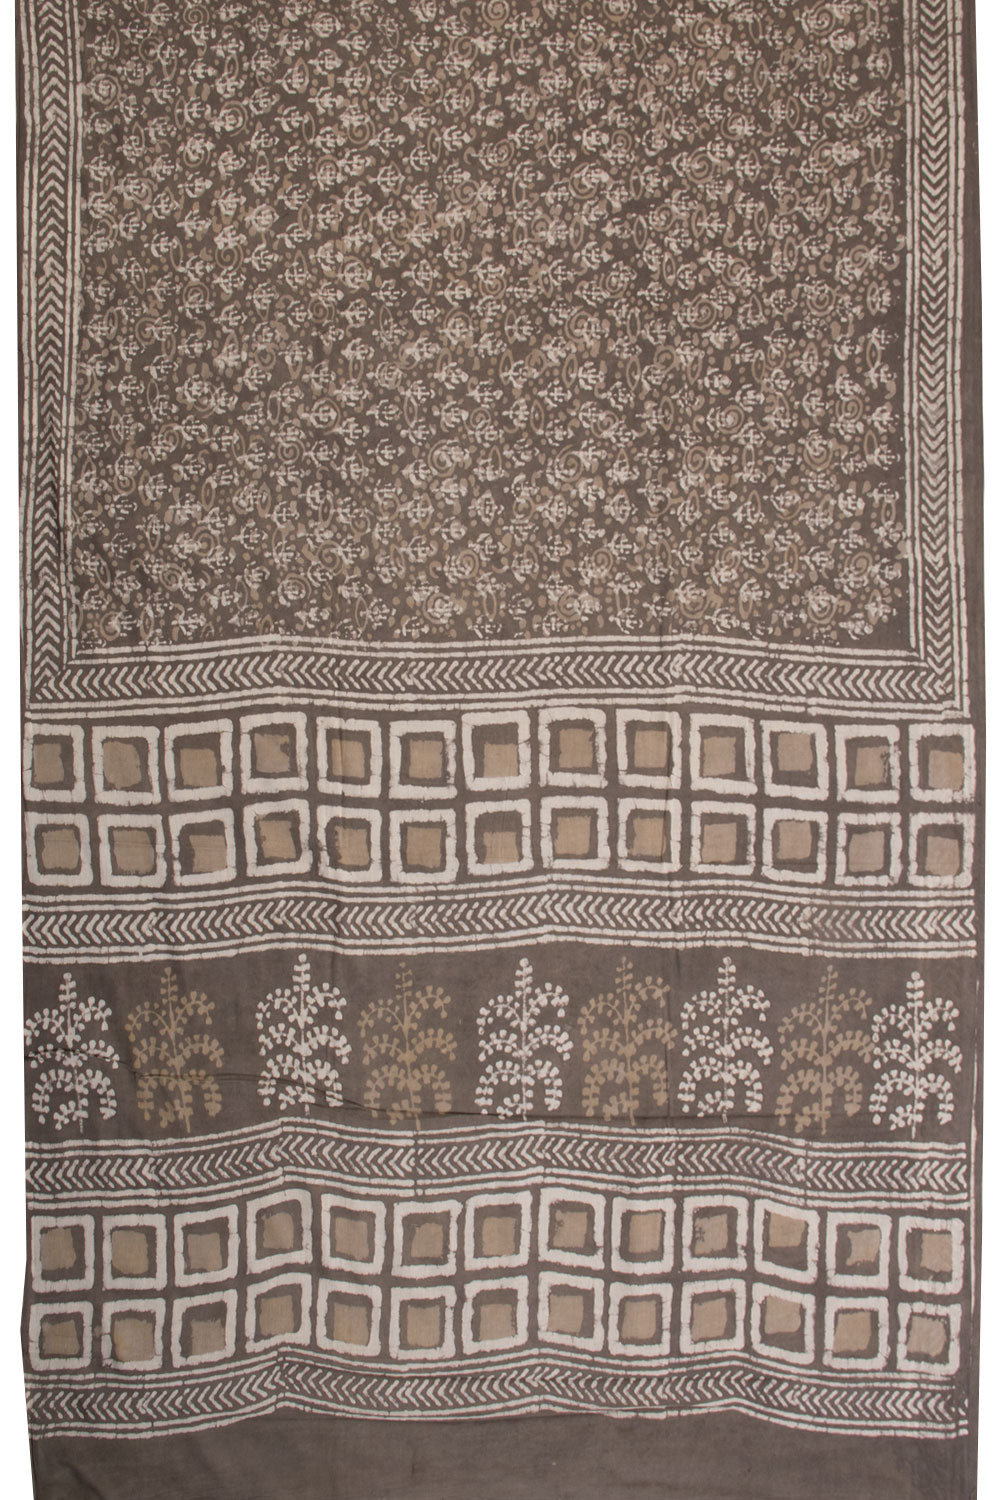 Brown Mulmul Dabu Printed Cotton Saree 10068592 - Avishya